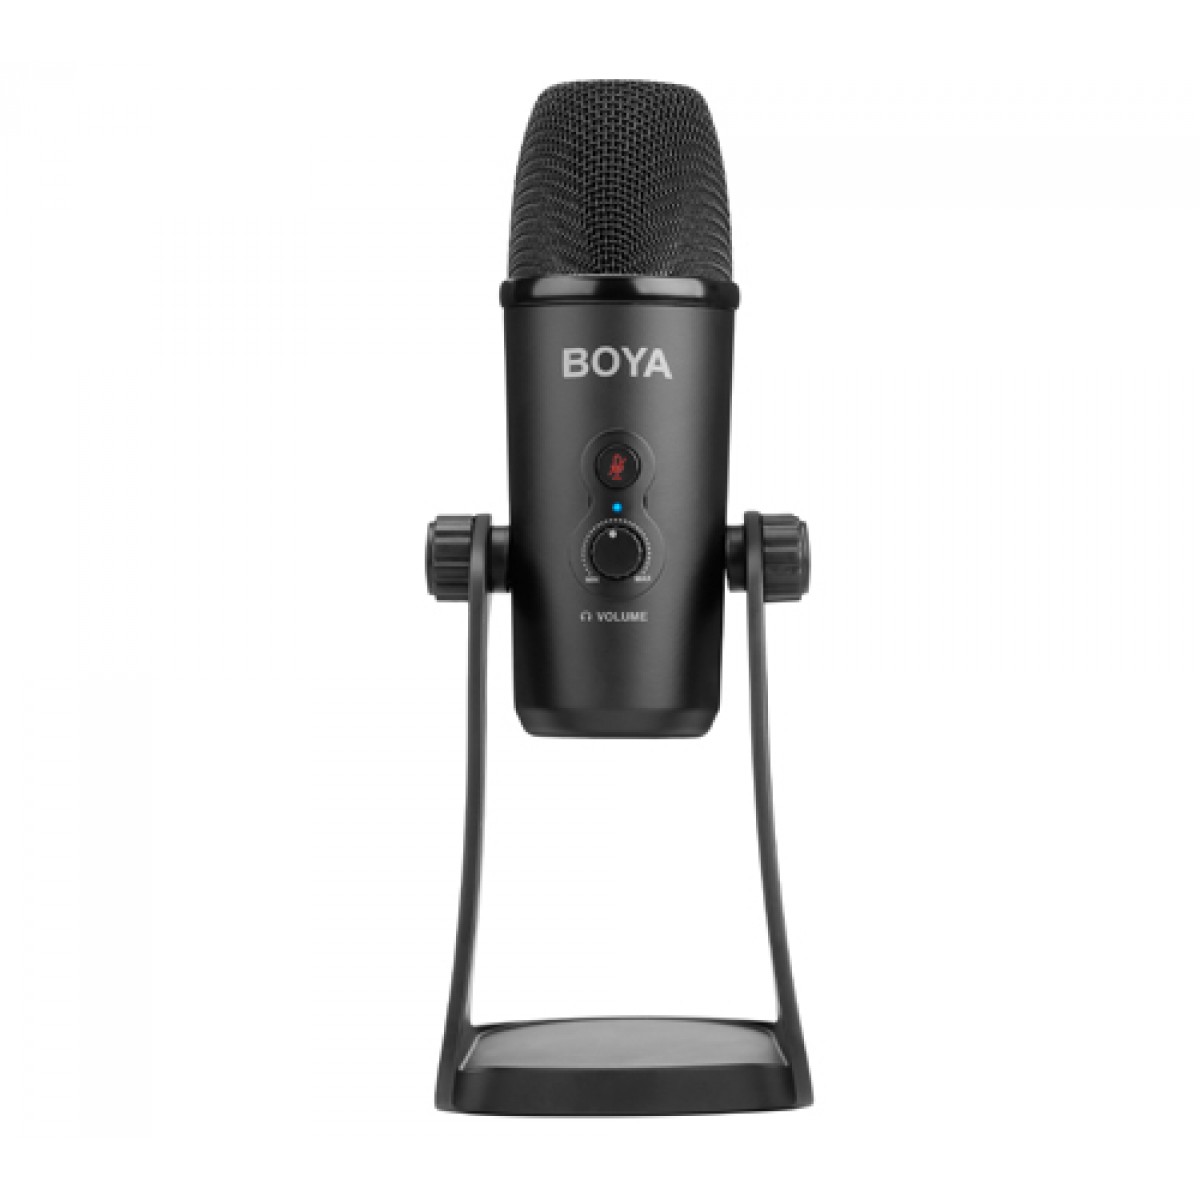 Microfone BOYA BY-PM700, USB, Com Suporte, Black